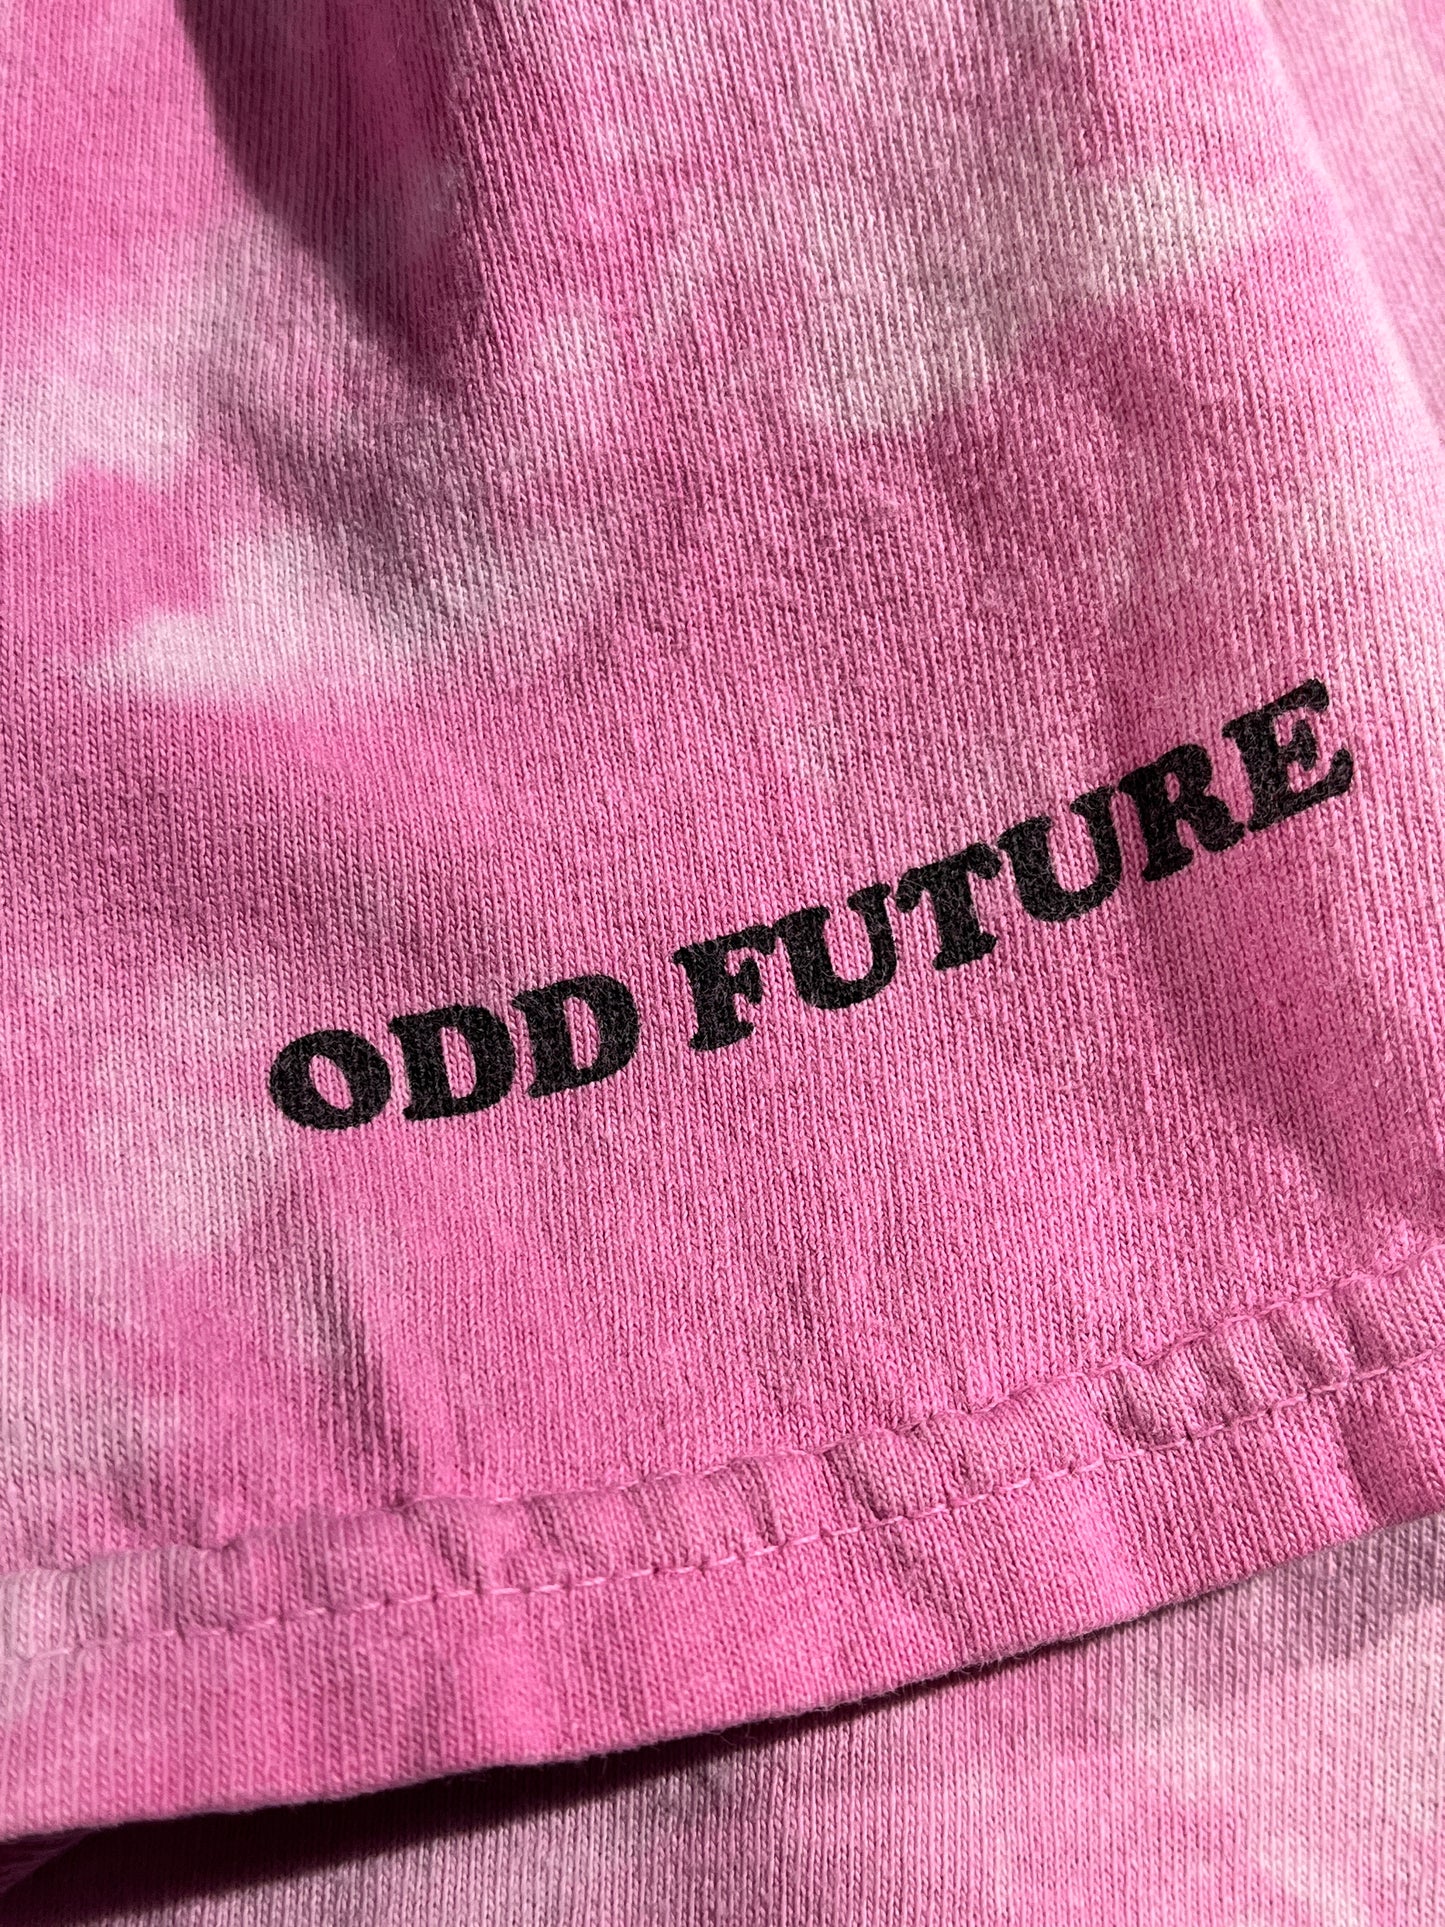 Vintage Odd Future T-Shirt Randy's Donuts